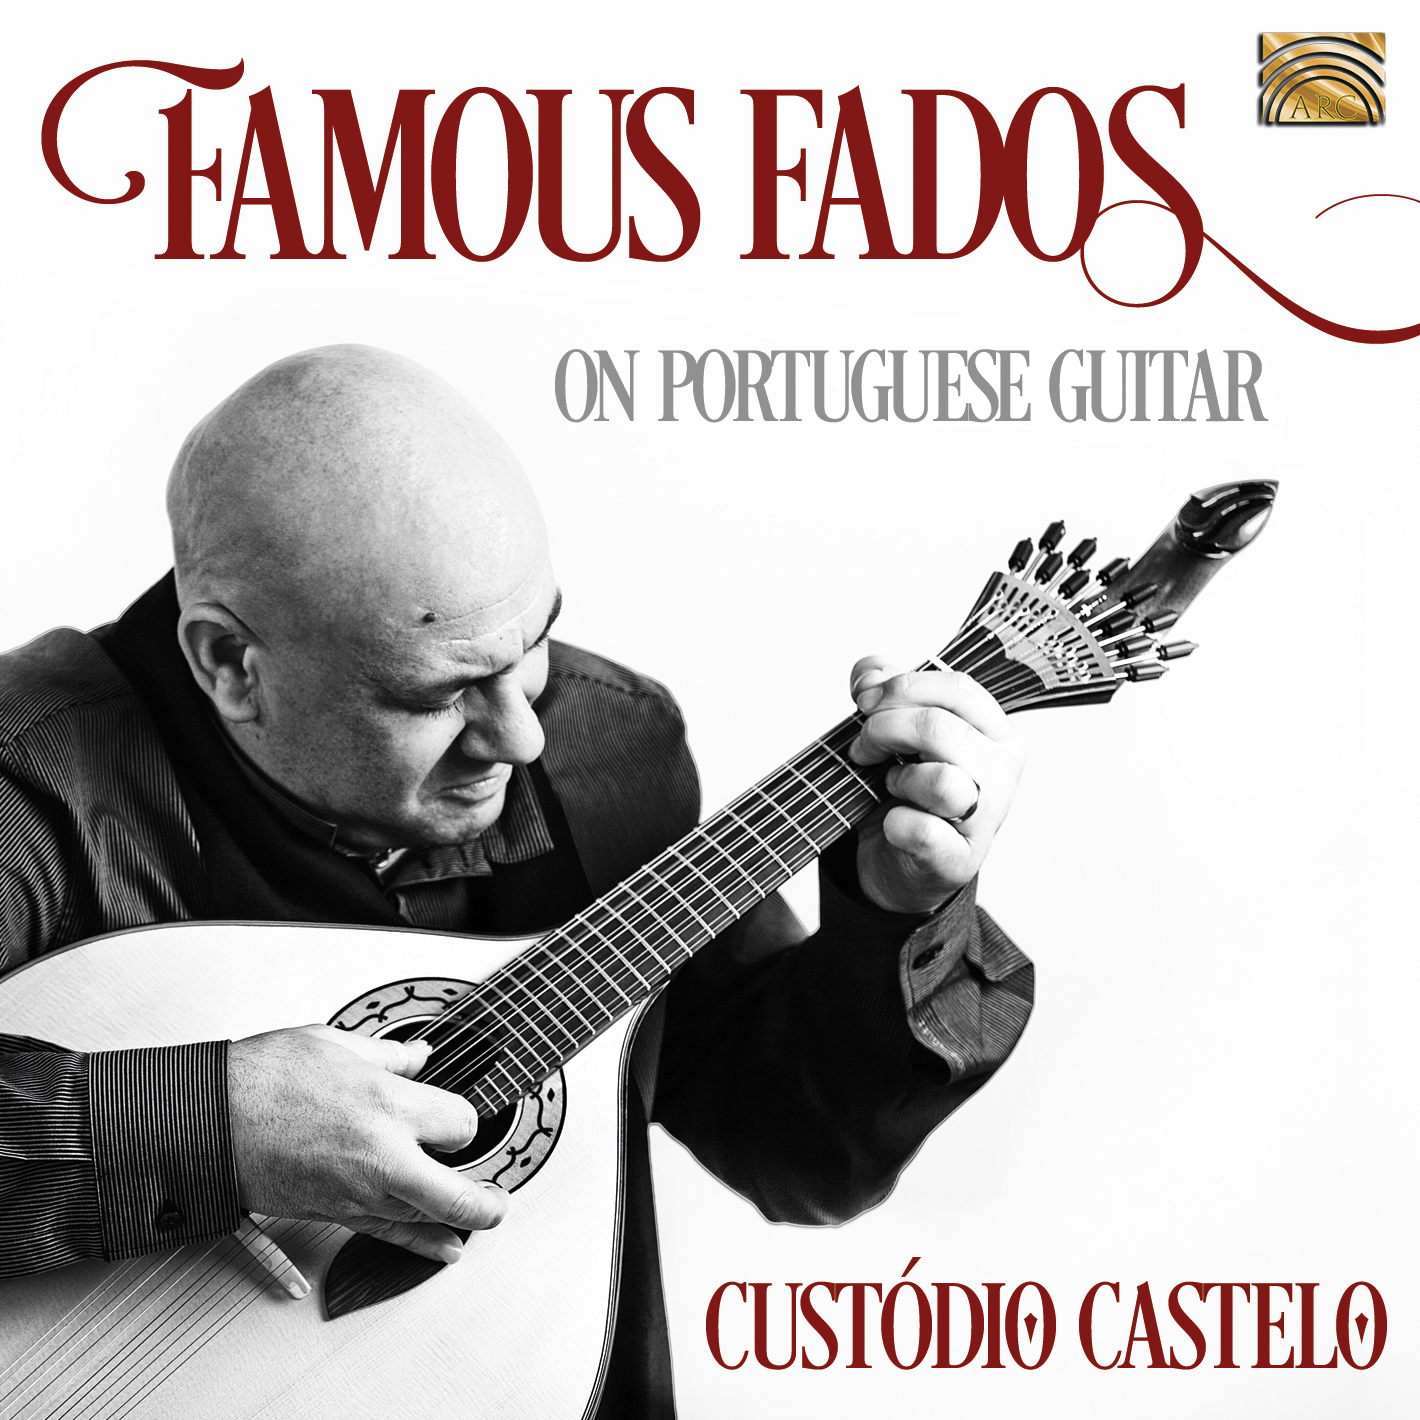 EUCD2931 Famous Fados on Portuguese Guitar